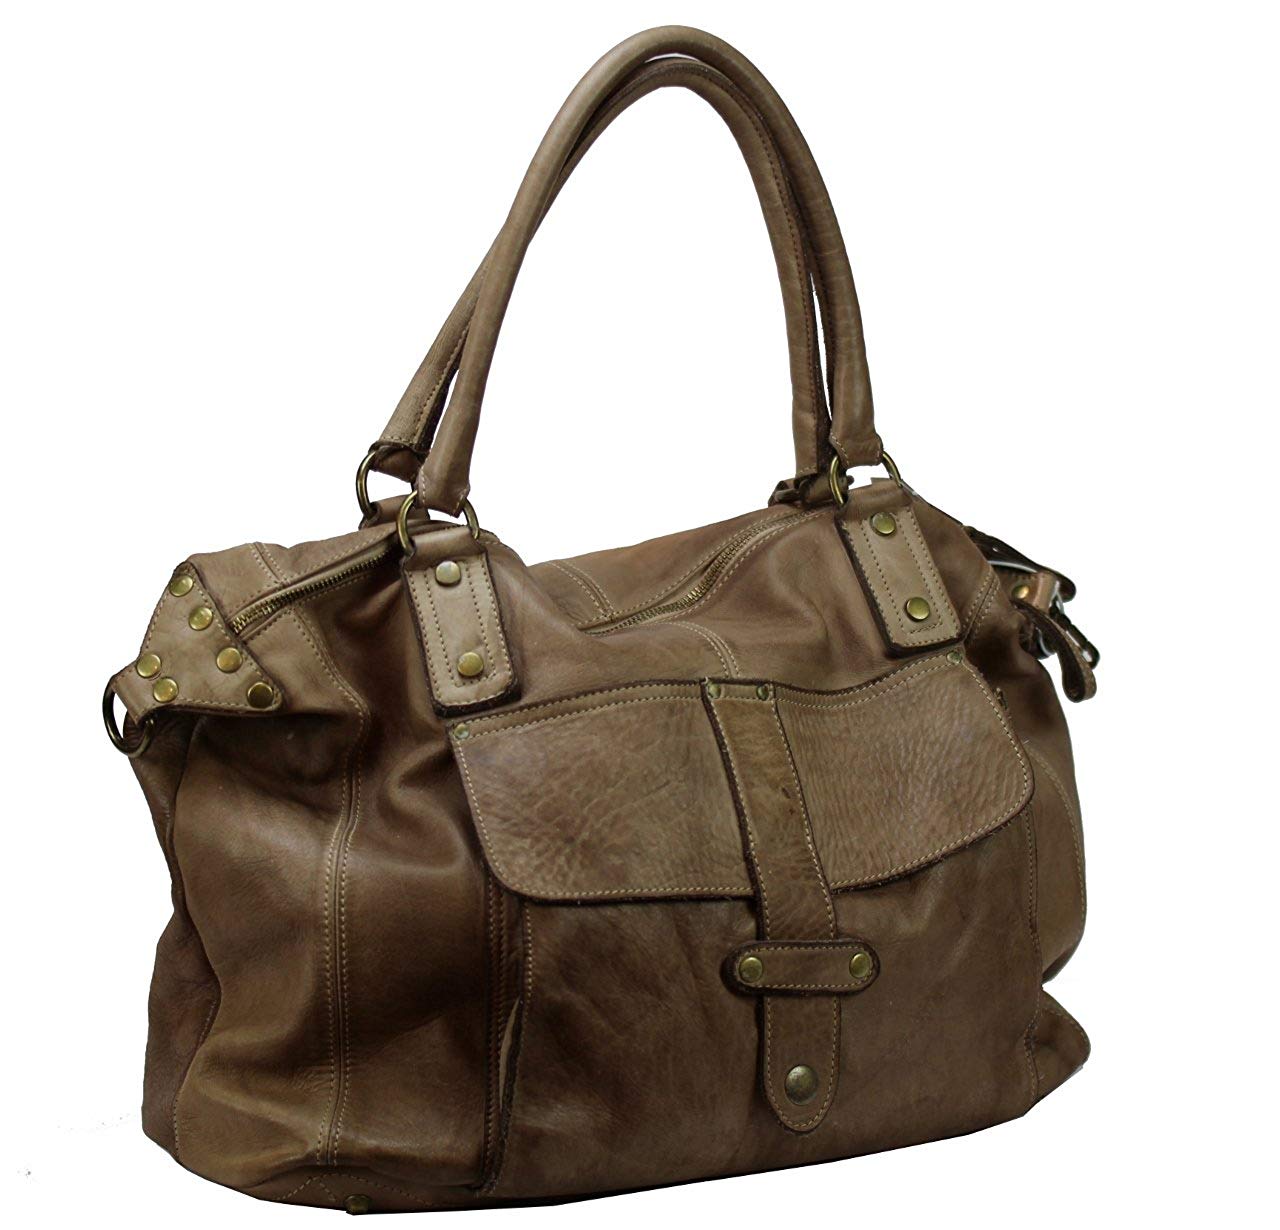 BOZANA Bag Viola beige Italy Designer Damen Handtasche Ledertasche Schultertasche Tasche Leder Shopper Neu